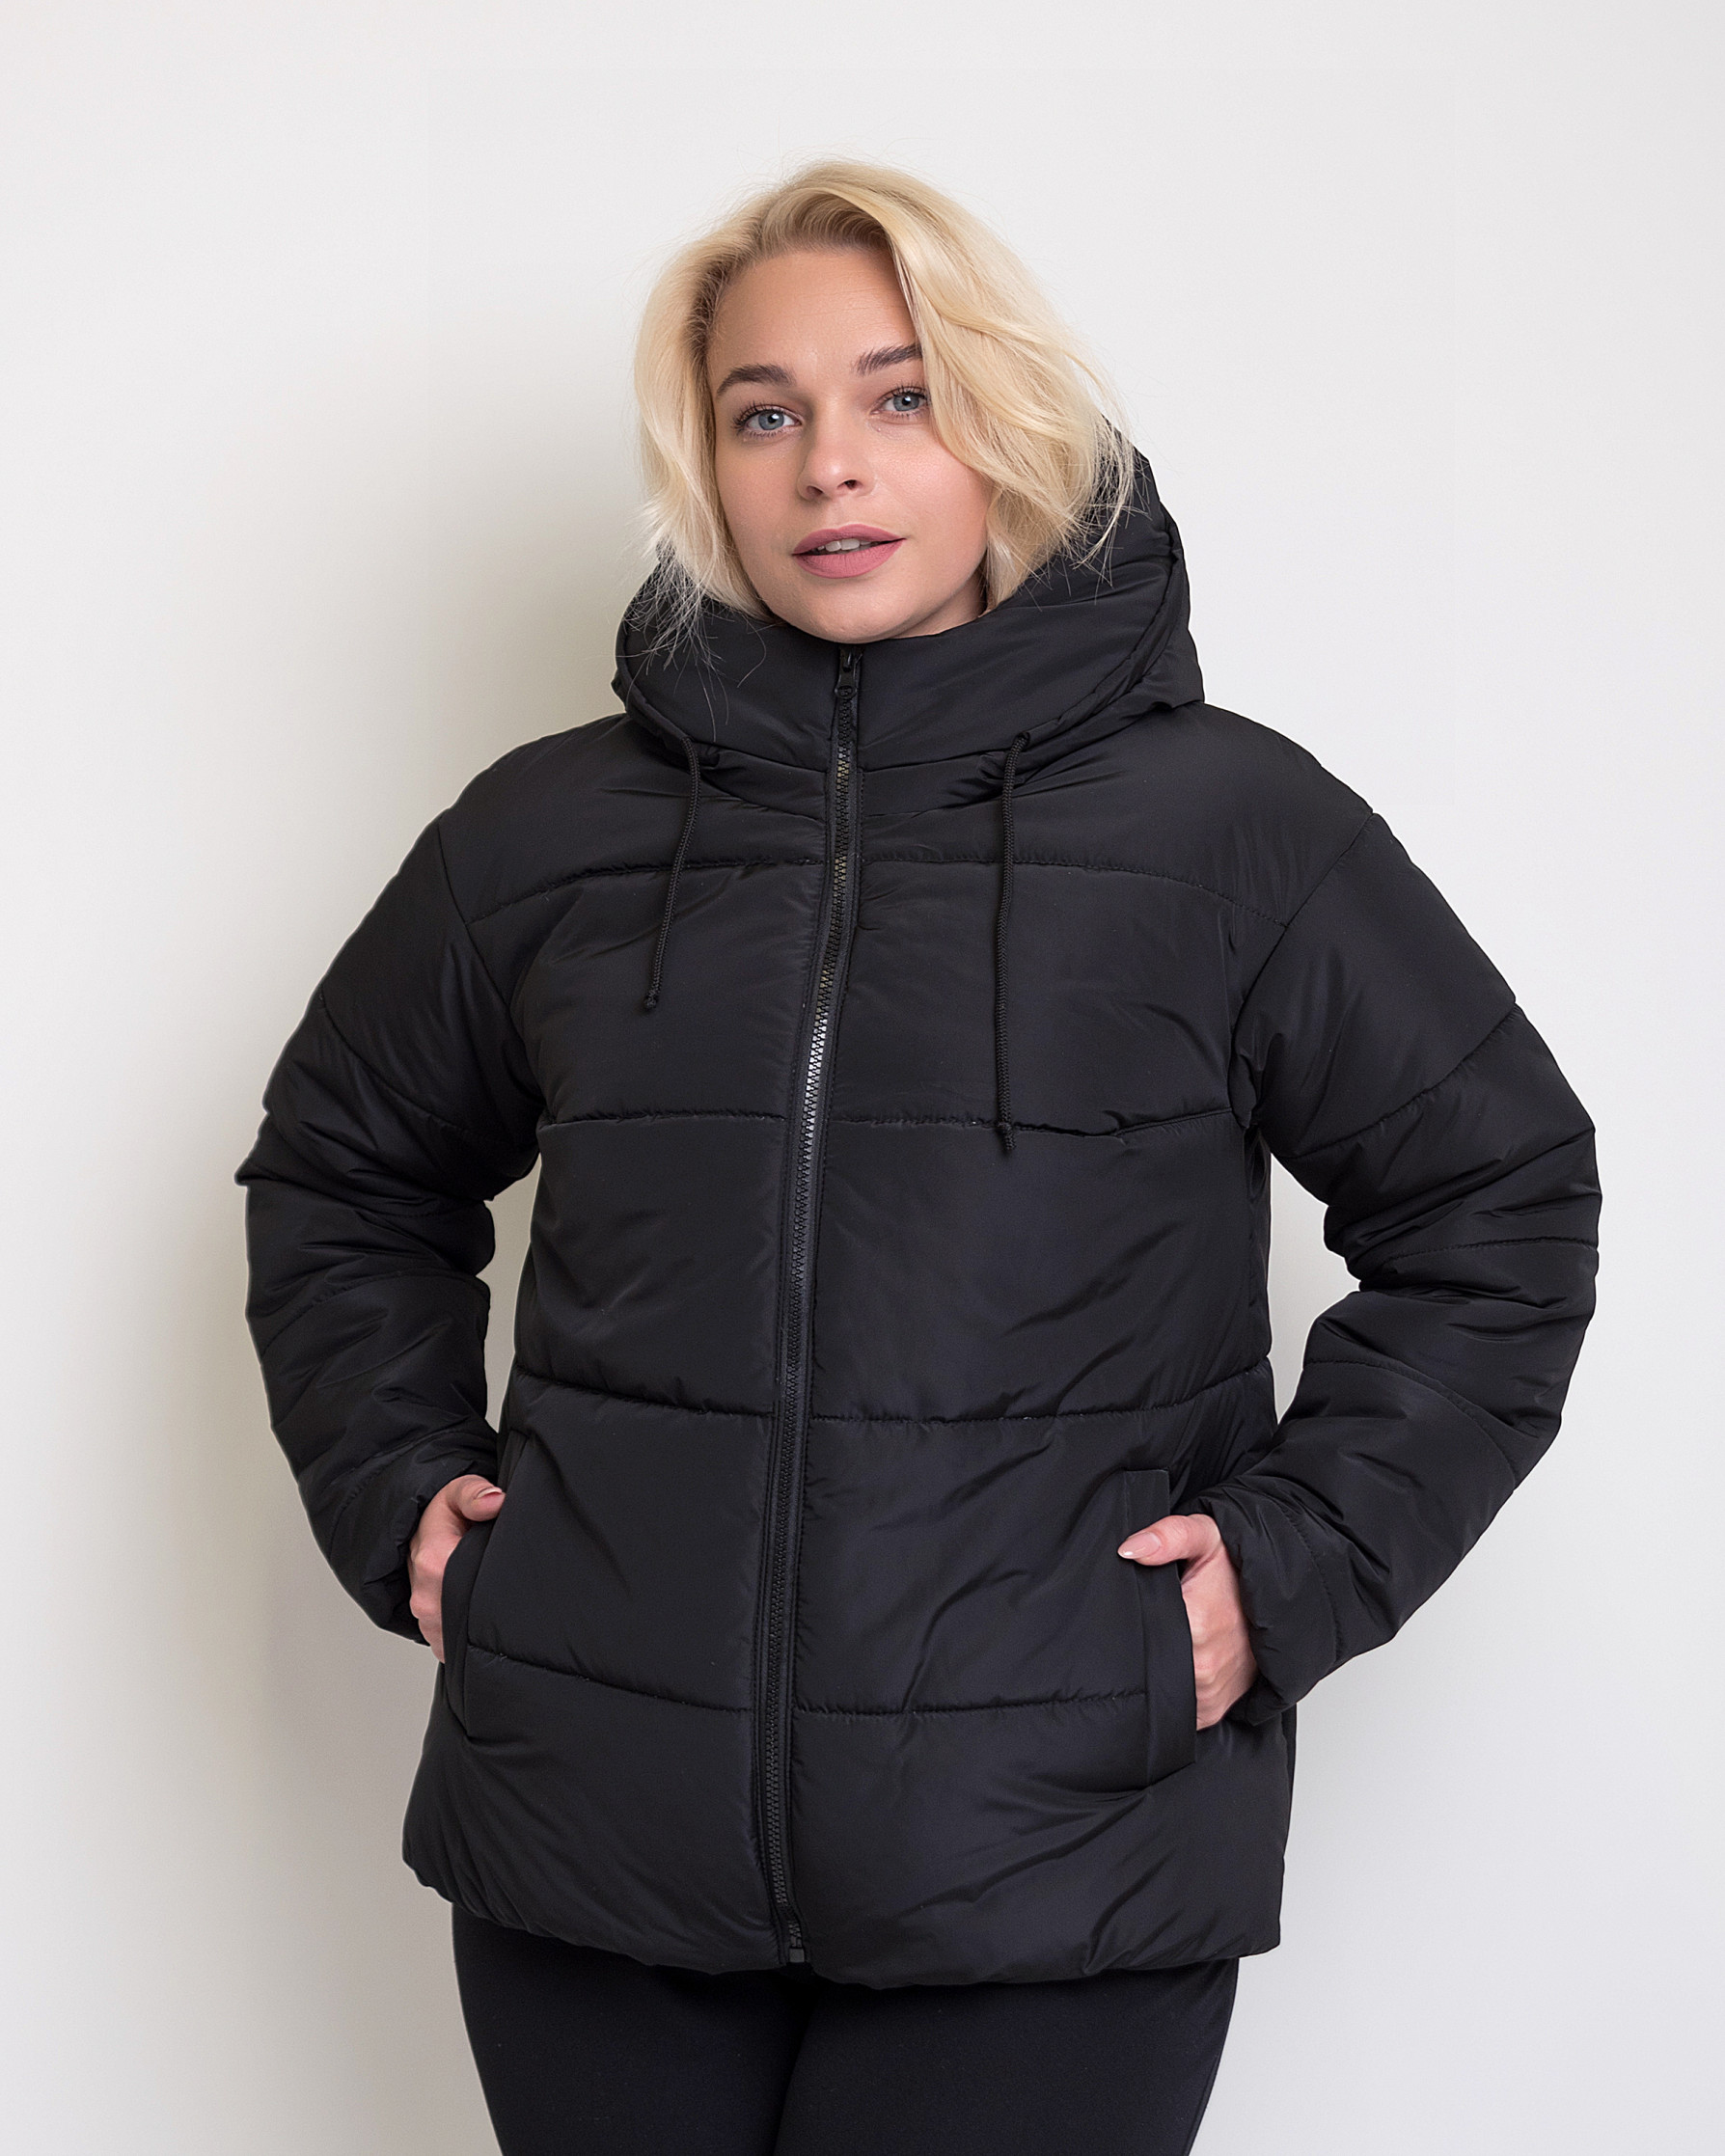 Зимняя женская куртка чёрного цвета Тахо батал